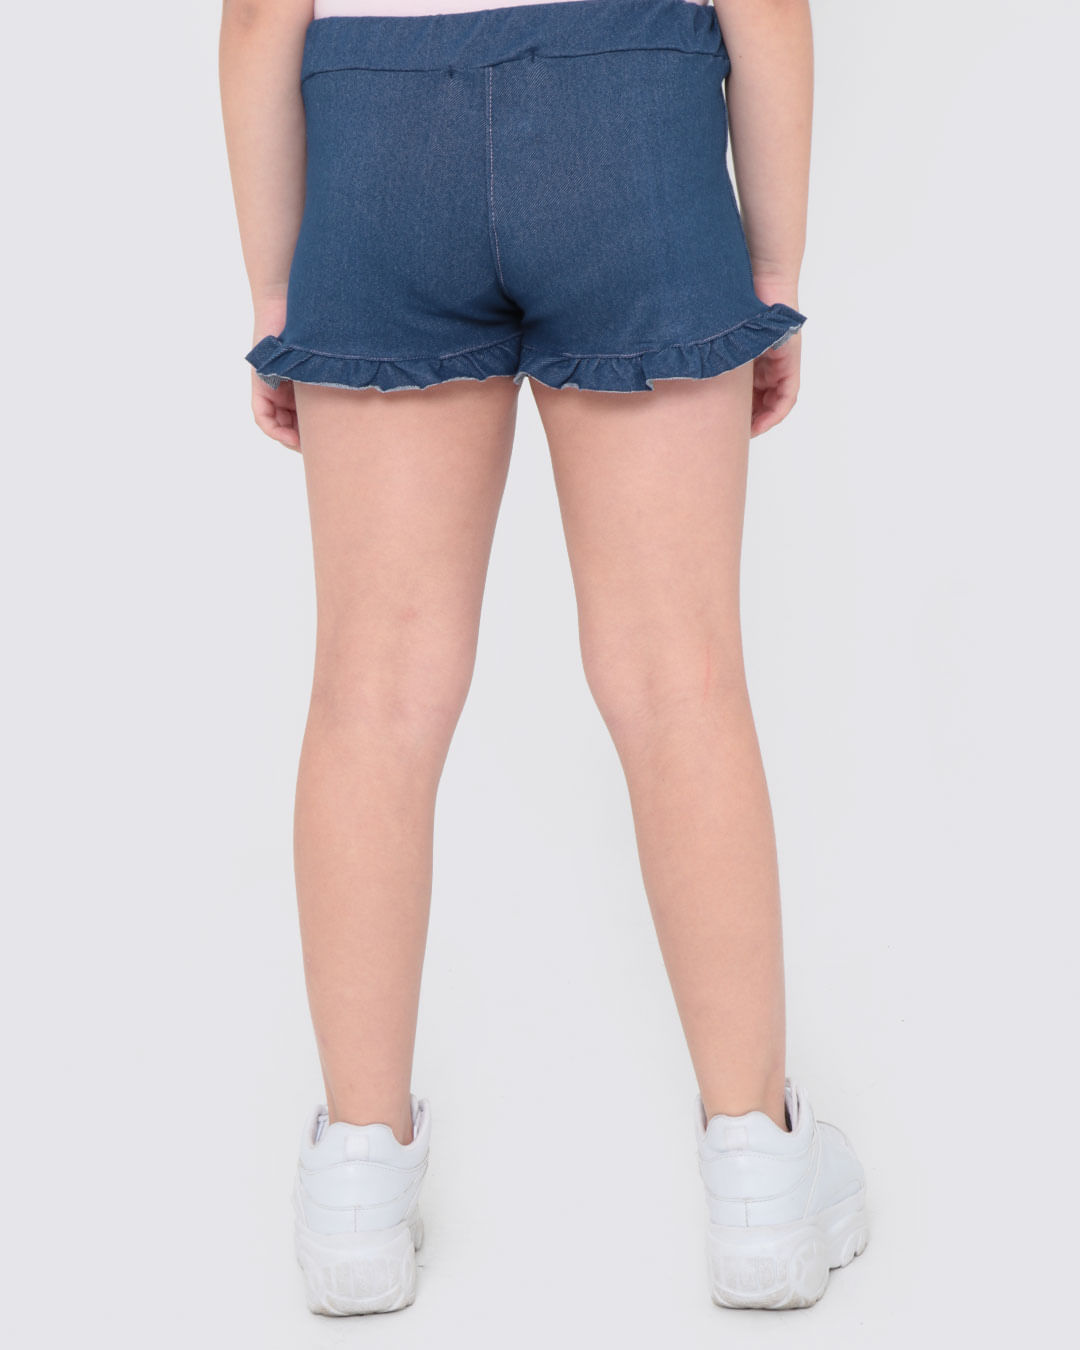 Shorts-21437-Babado-Fem410---Blue-Jeans-Medio